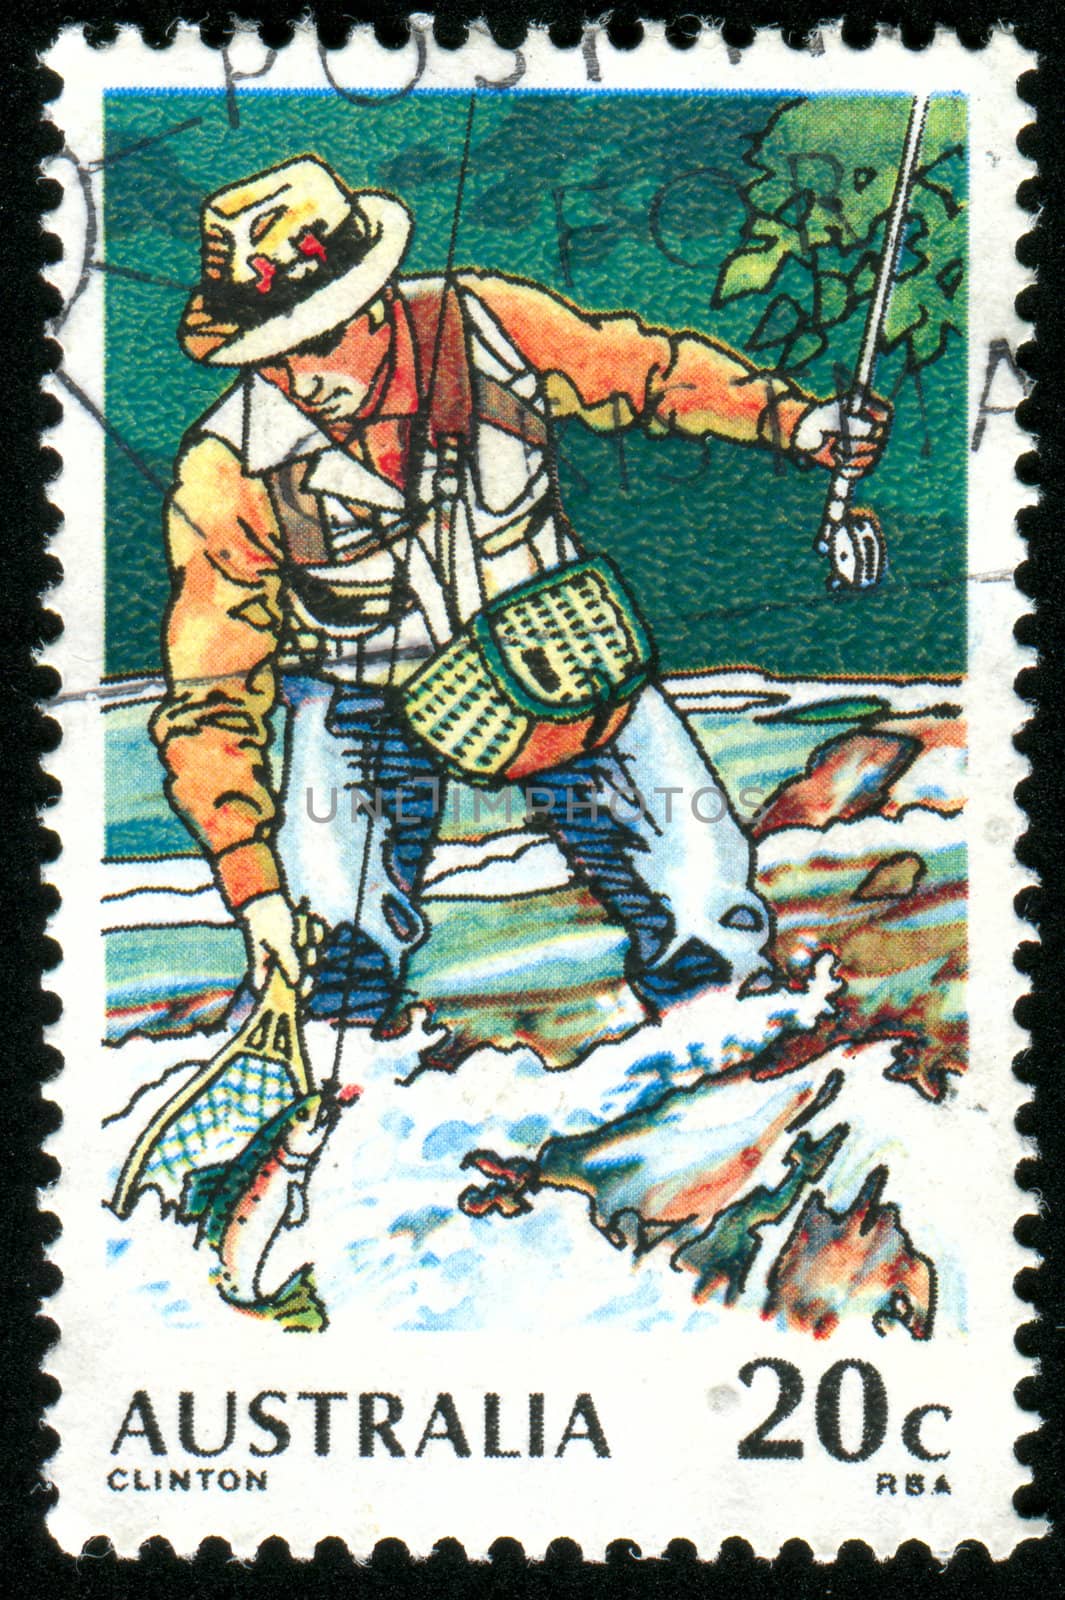 AUSTRALIA - CIRCA 1979: stamp printed by Australia, shows Trout Fishing, circa 1979